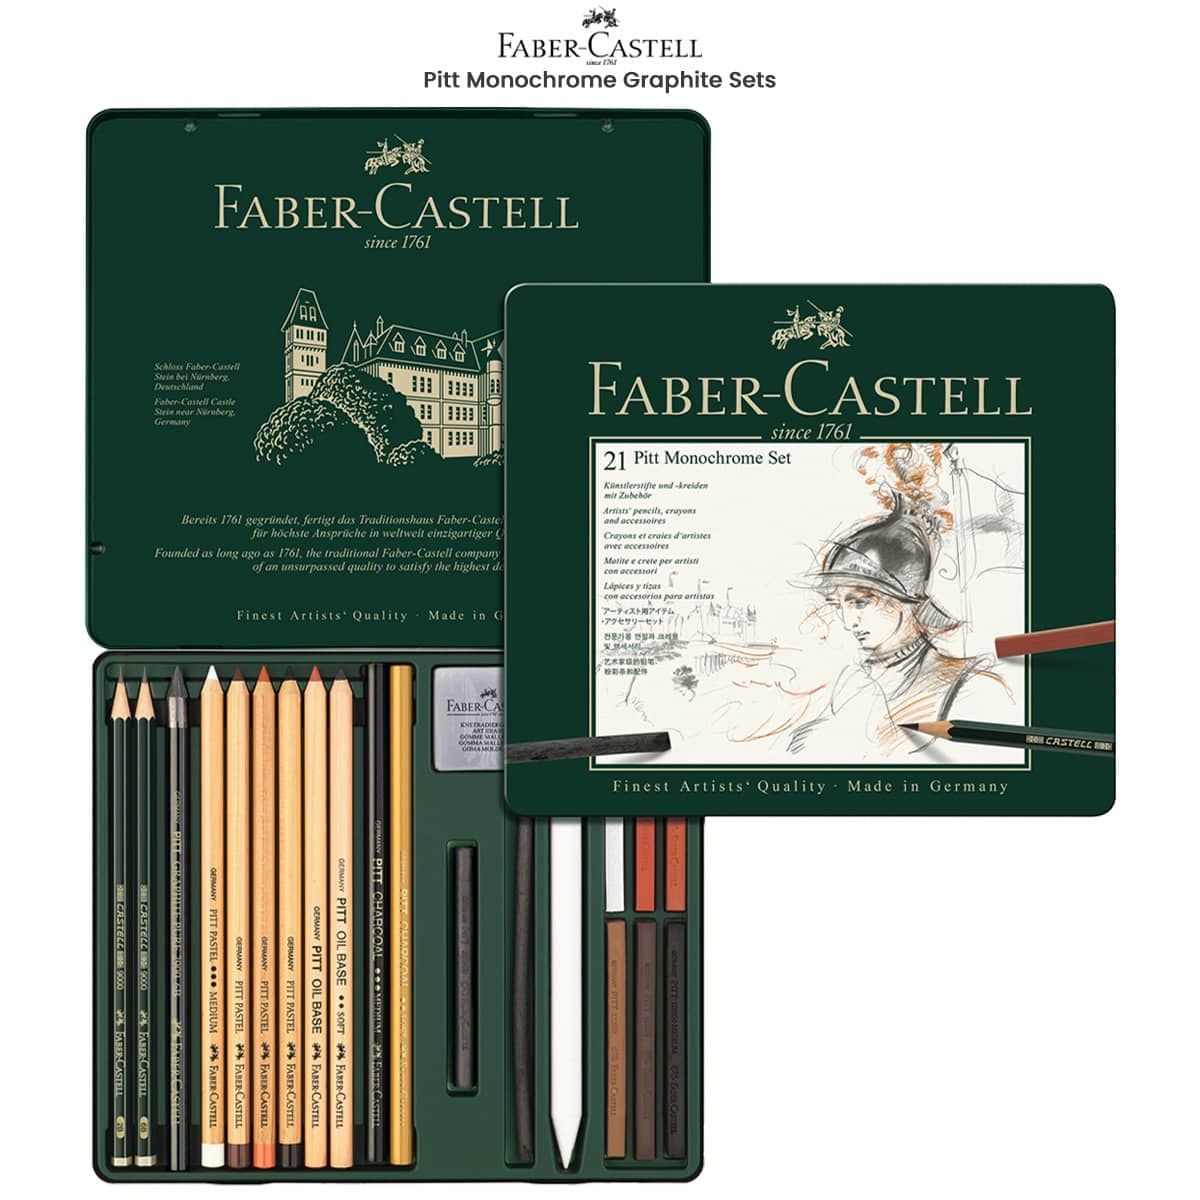 Faber-Castell Pitt Monochrome Graphite Sets